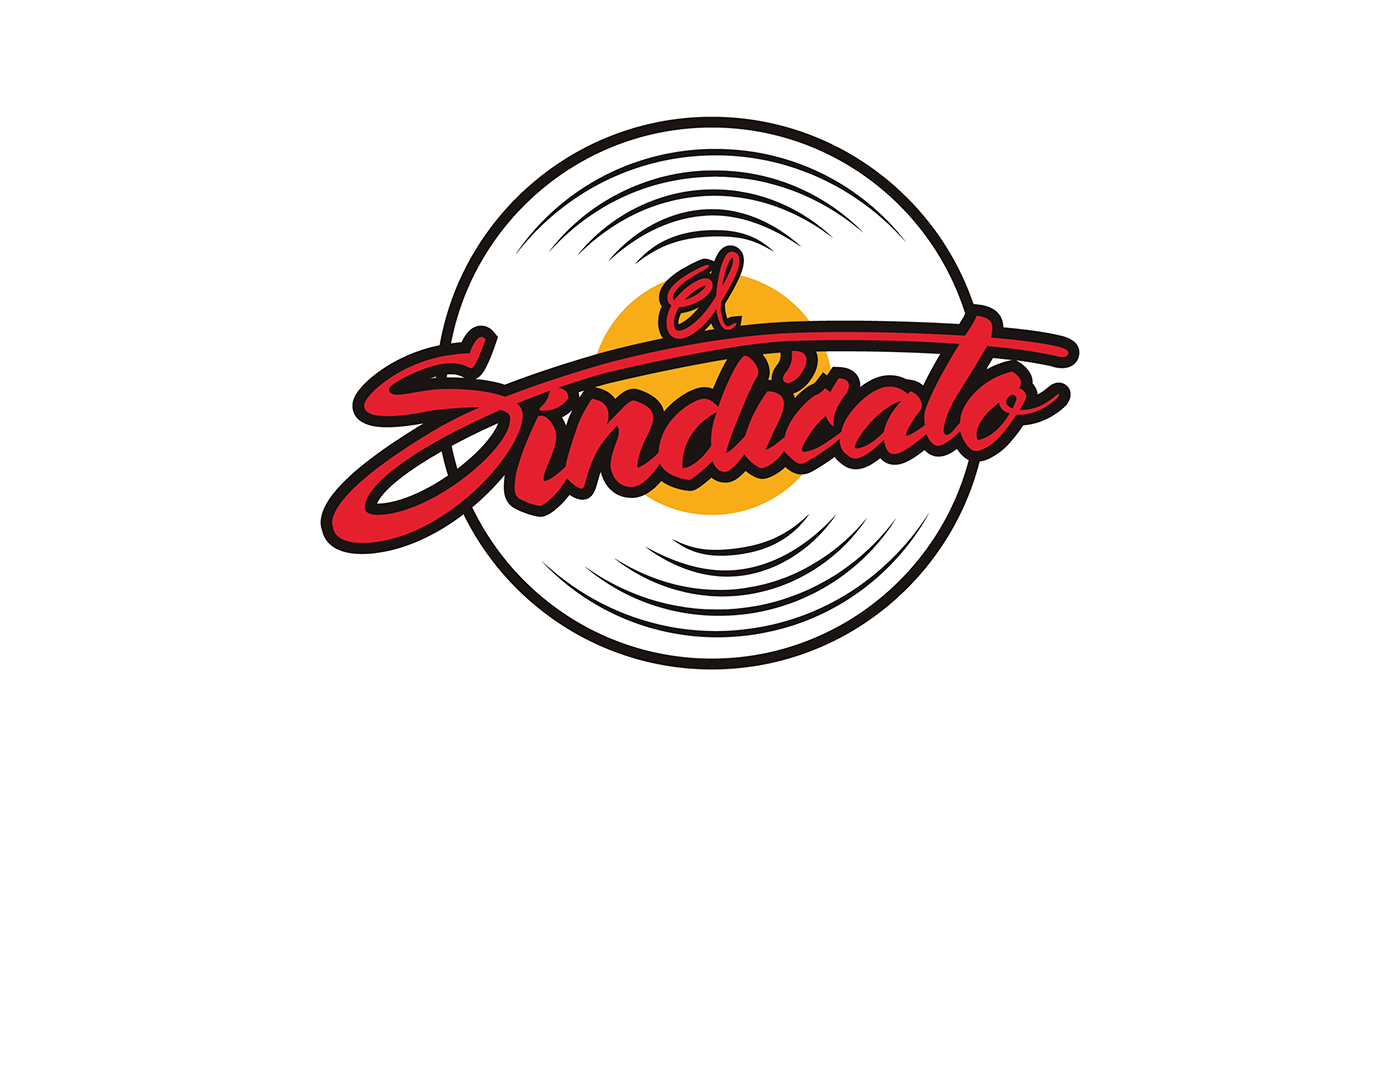 DJ Gang El Sindicato dj rocket olav Niko77ina logo brand Rockabilly music